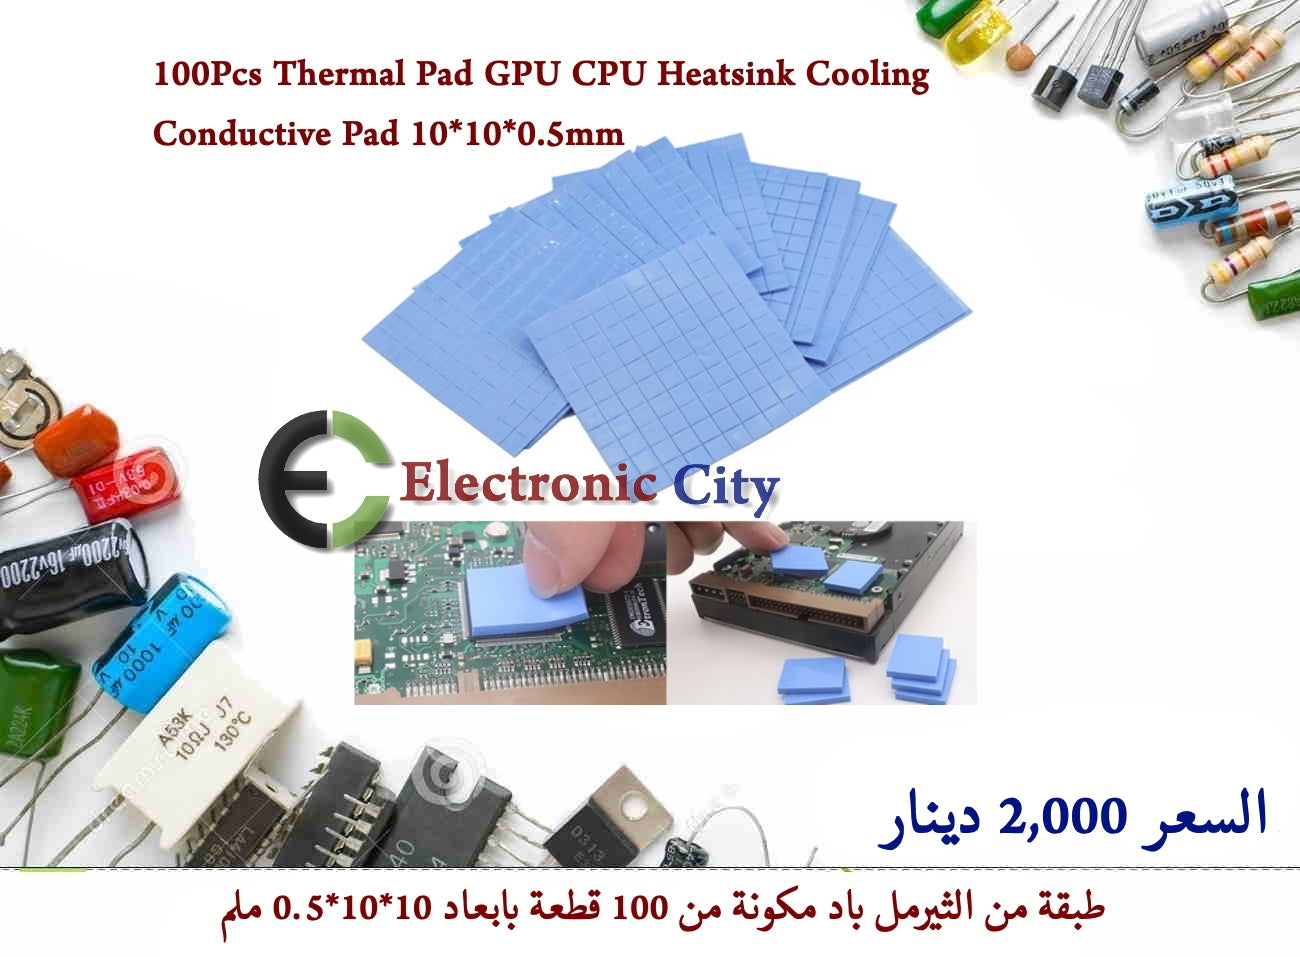 100Pcs Thermal Pad GPU CPU Heatsink Cooling Conductive Pad 10x10x0.5mm